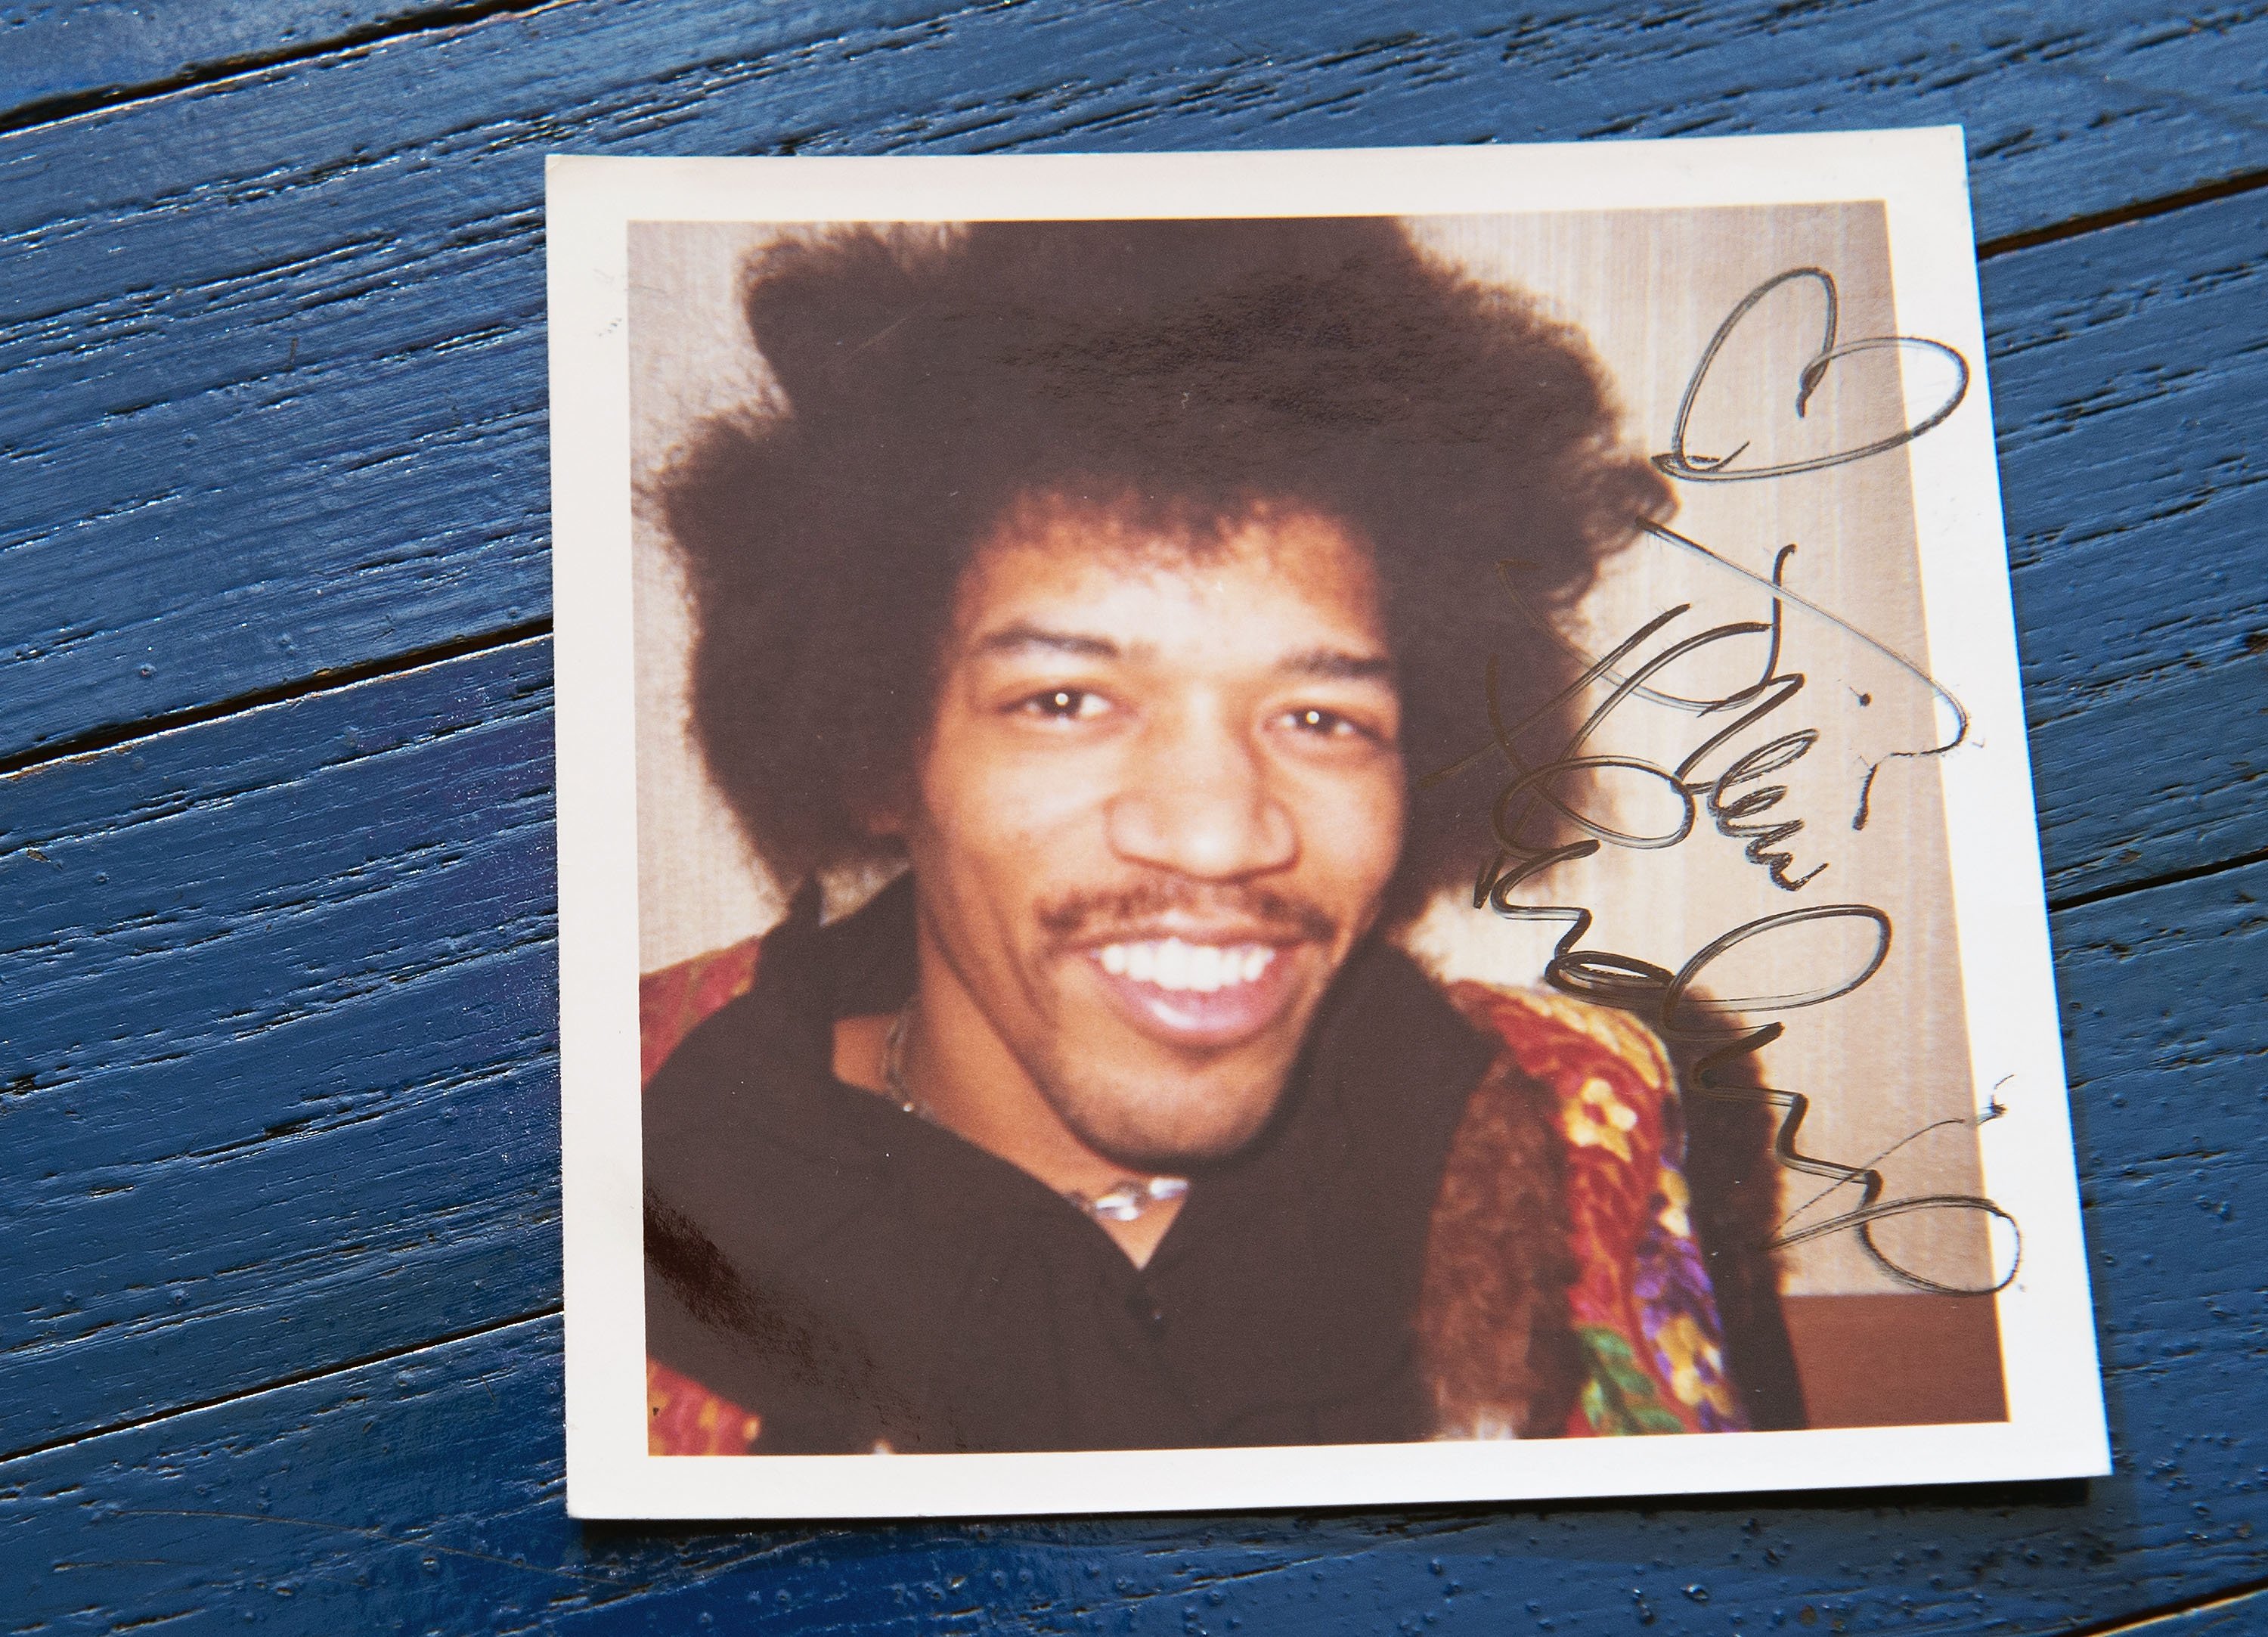 A Jimi Hendrix photograph on a blue table